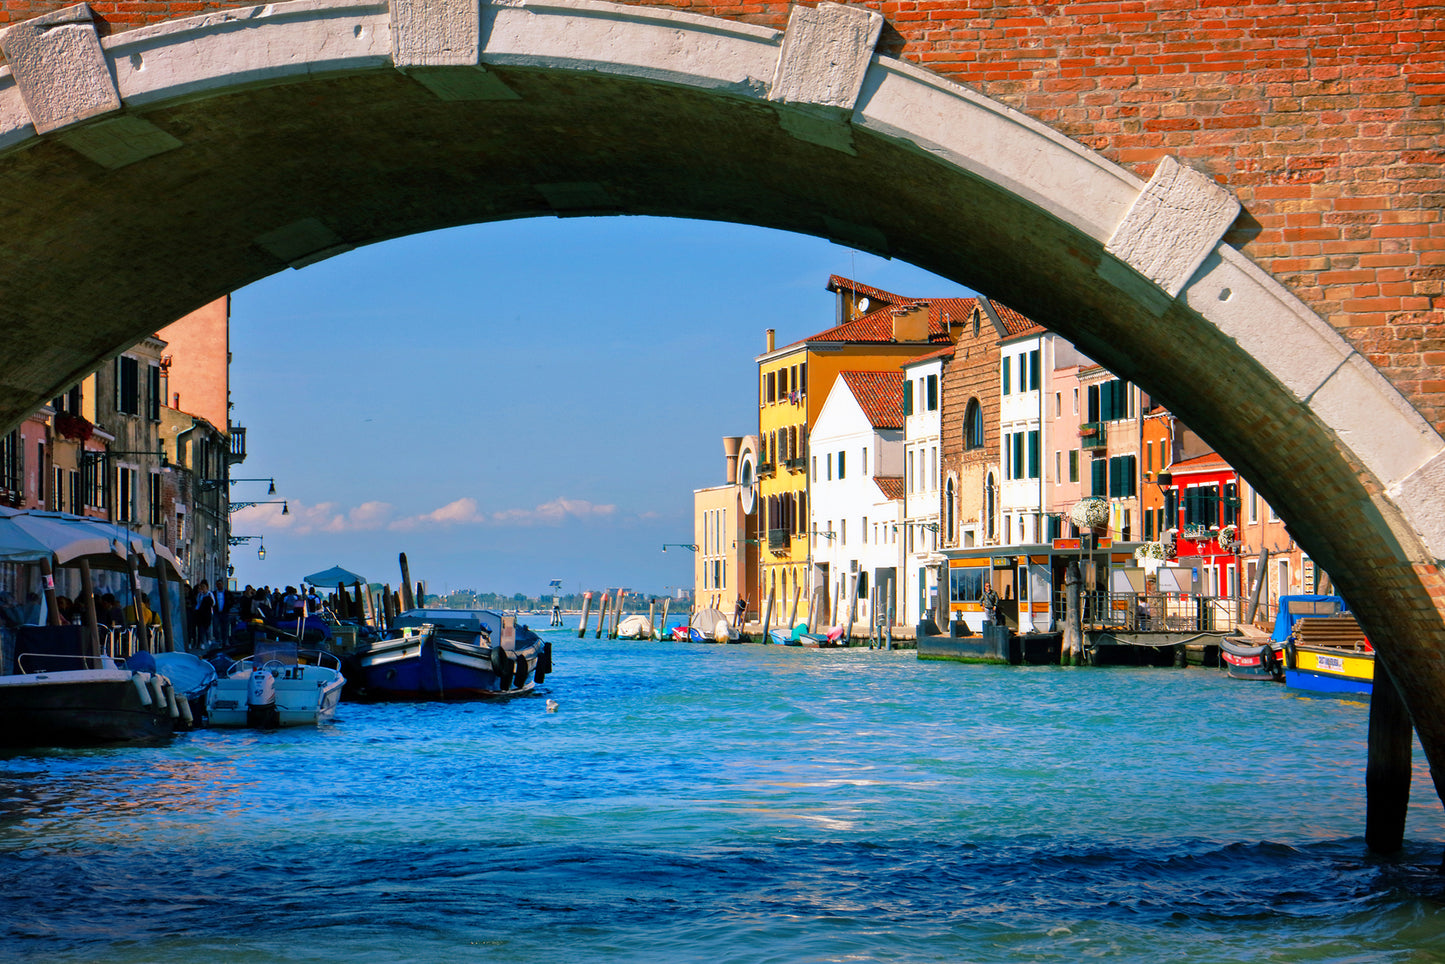 Grand Canal Bridges of Venice by LARRY HAMPTON